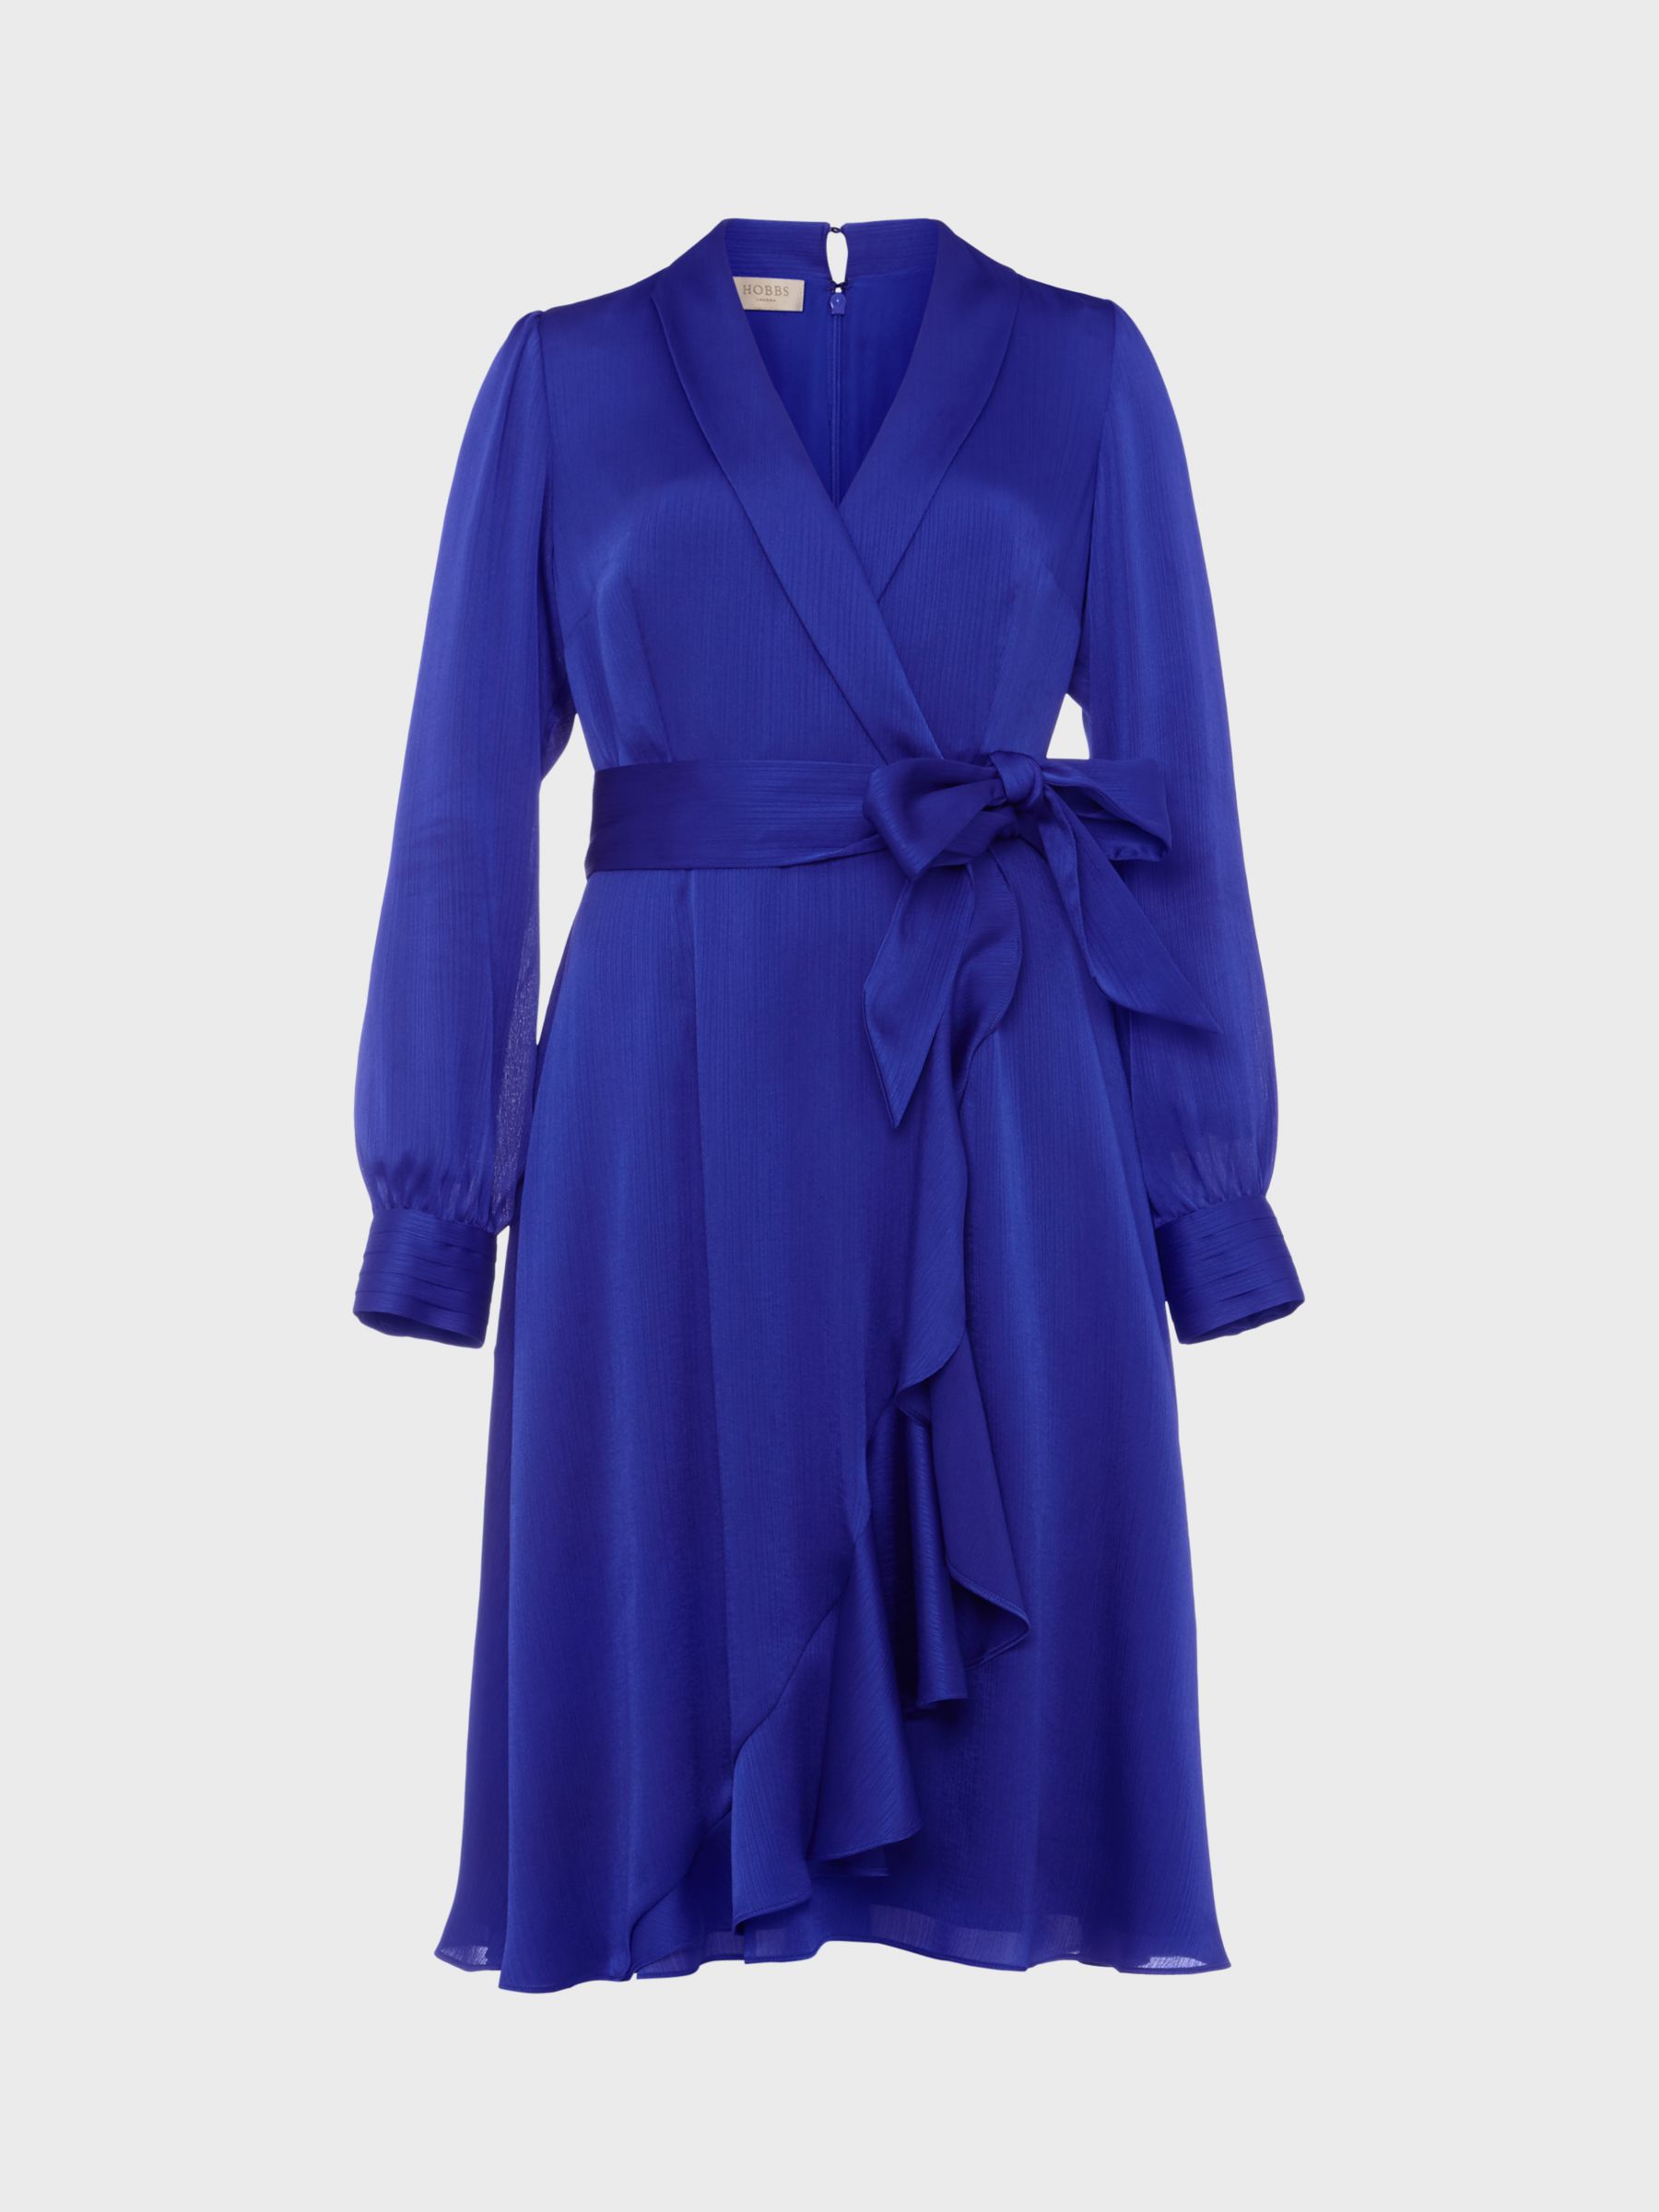 Hobbs Sally Plain Wrap Dress, Egyptian Blue at John Lewis & Partners